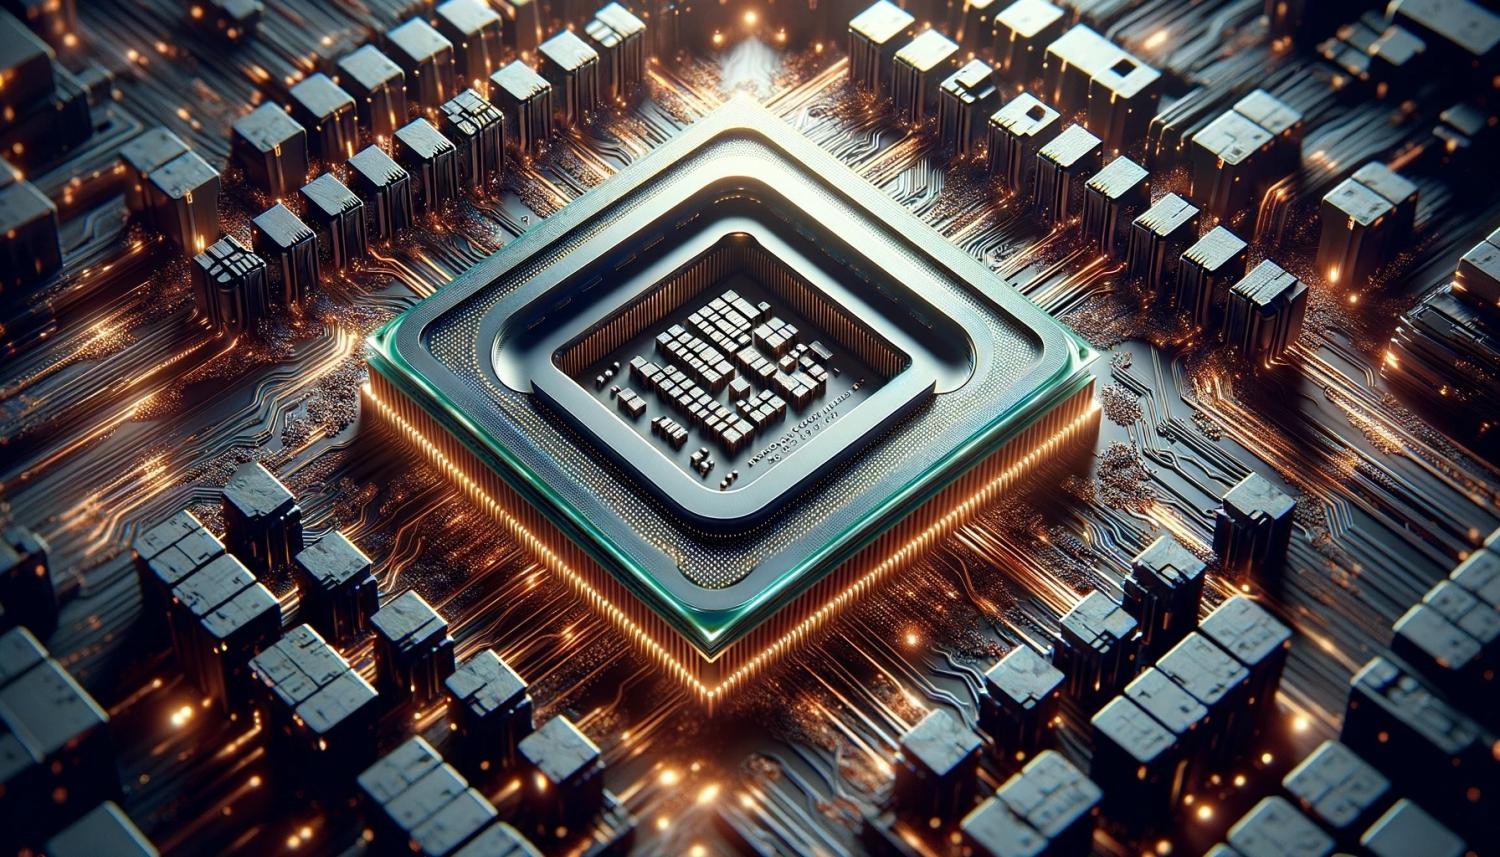 AMD Ryzen 7000 Zen 4 [ANA KONU] 5nm, DDR5, PCIe 5.0